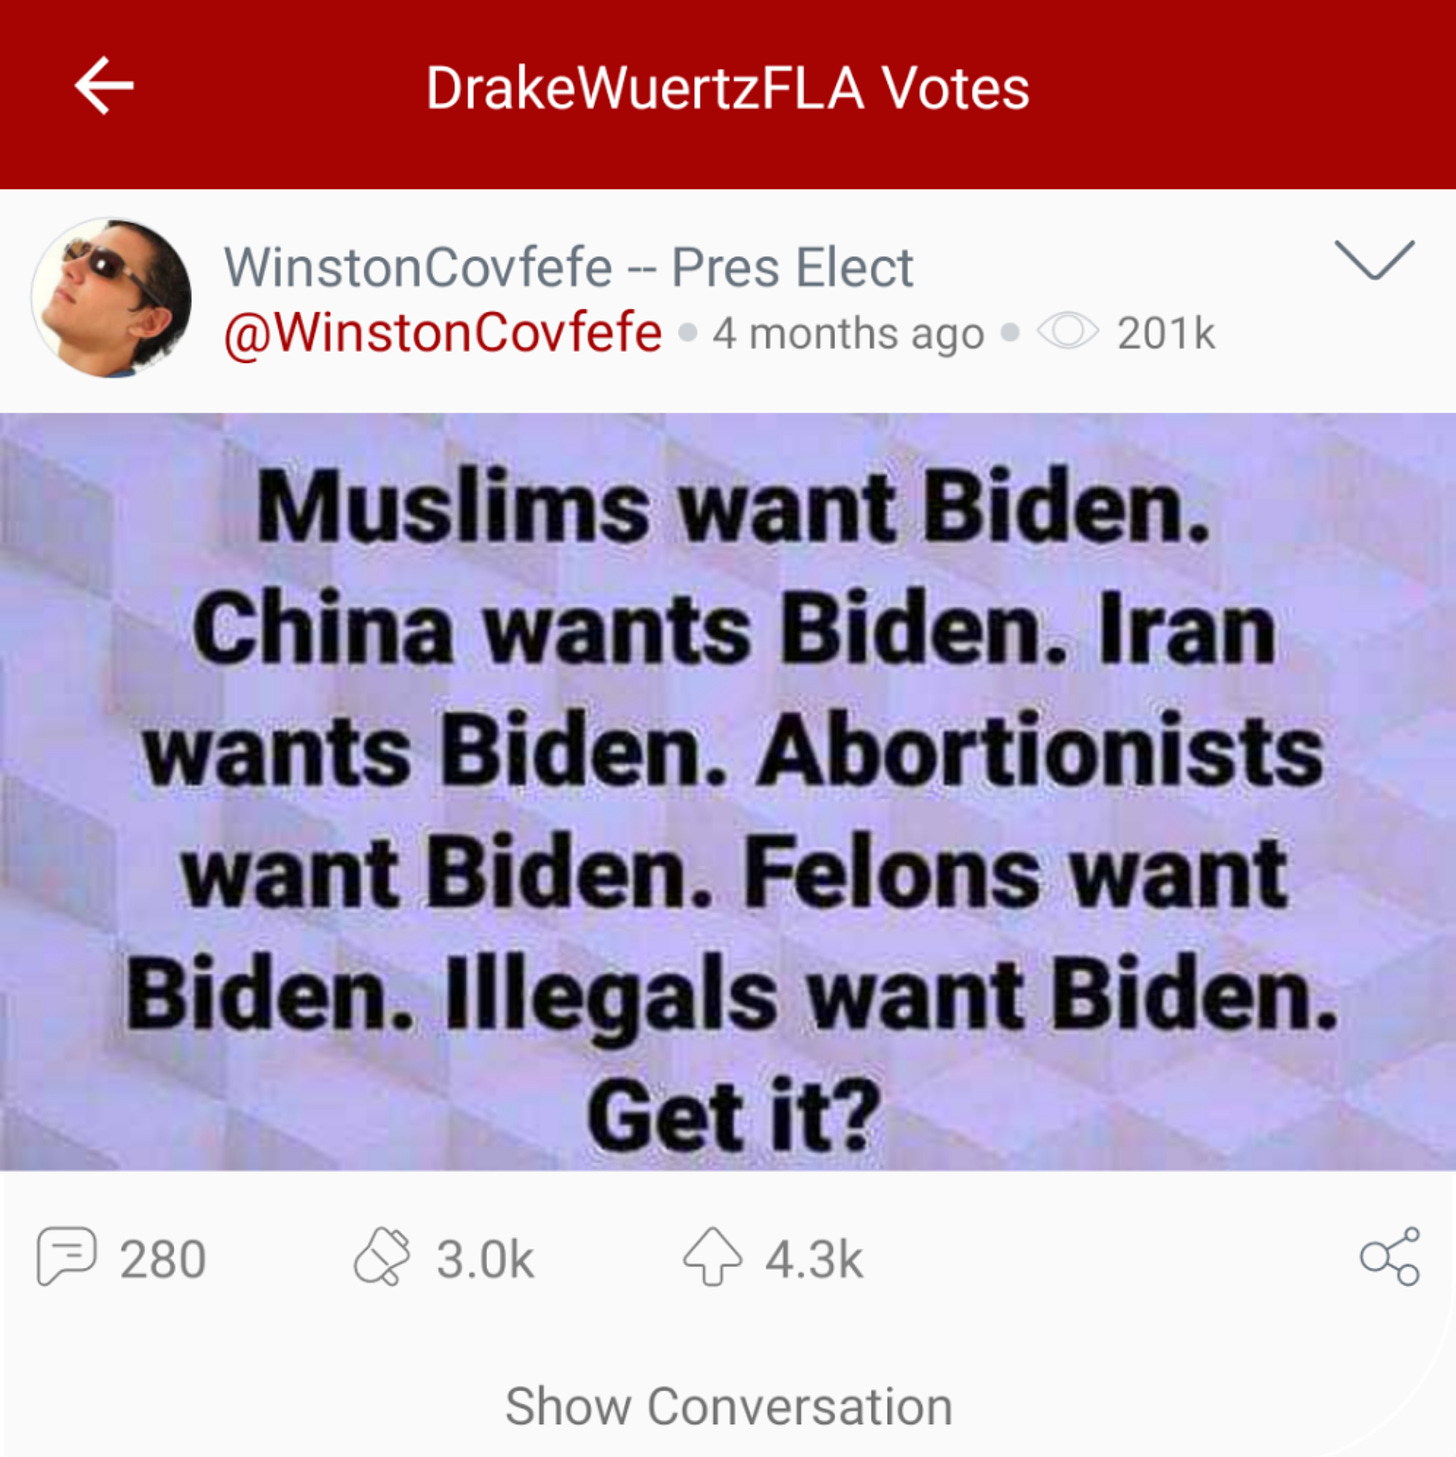 @DrakeWuertzFLA “votes” an anti-Muslim meme from “WinstonCovfefe” on Parler. (Image: Parler screenshot.)